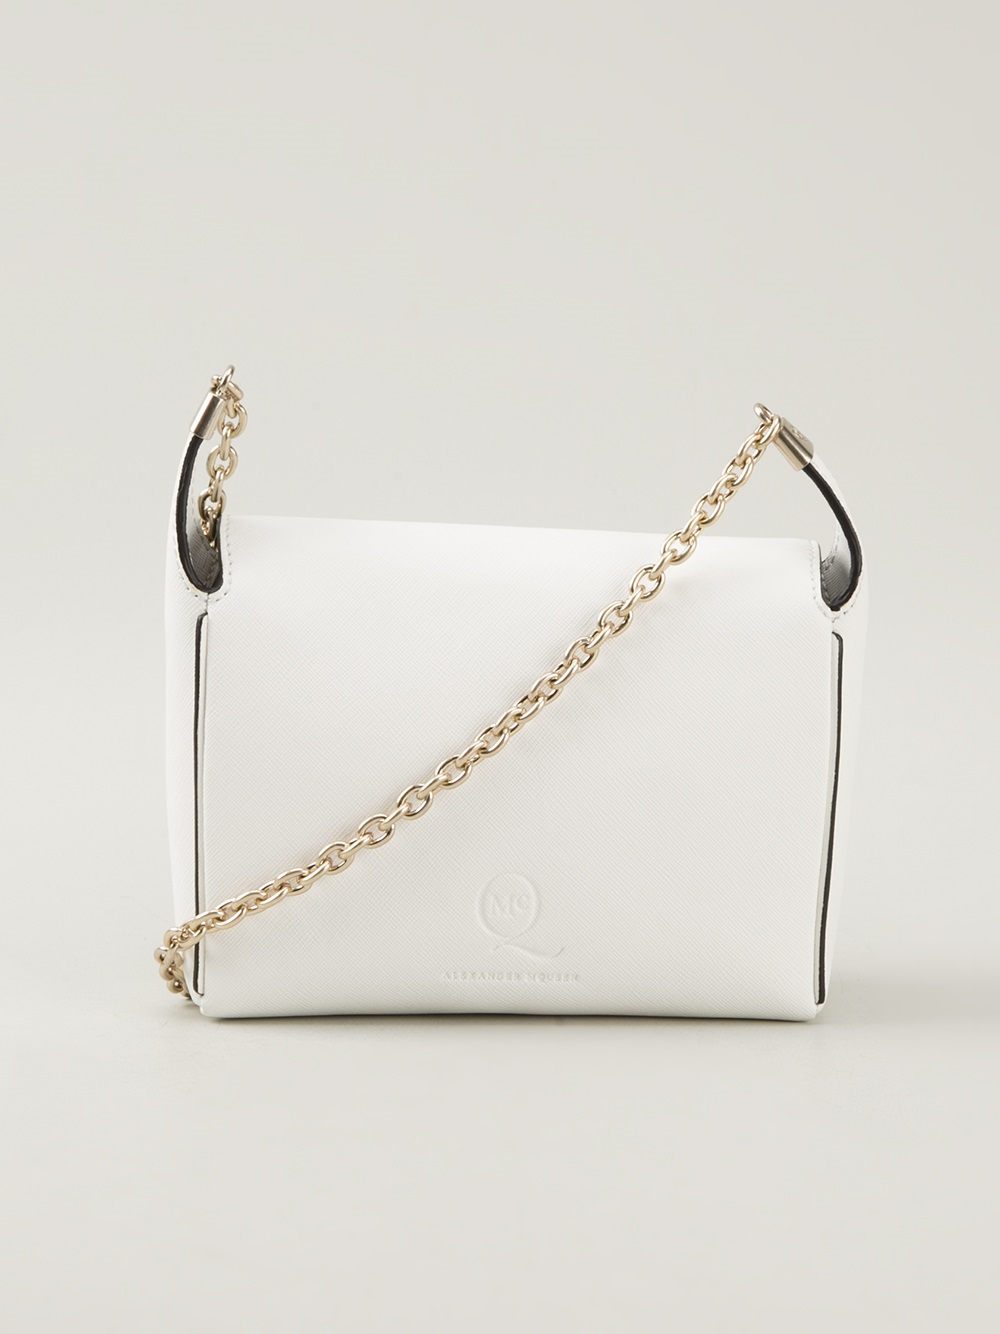 Lyst - Mcq Chain Strap Shoulder Bag in White